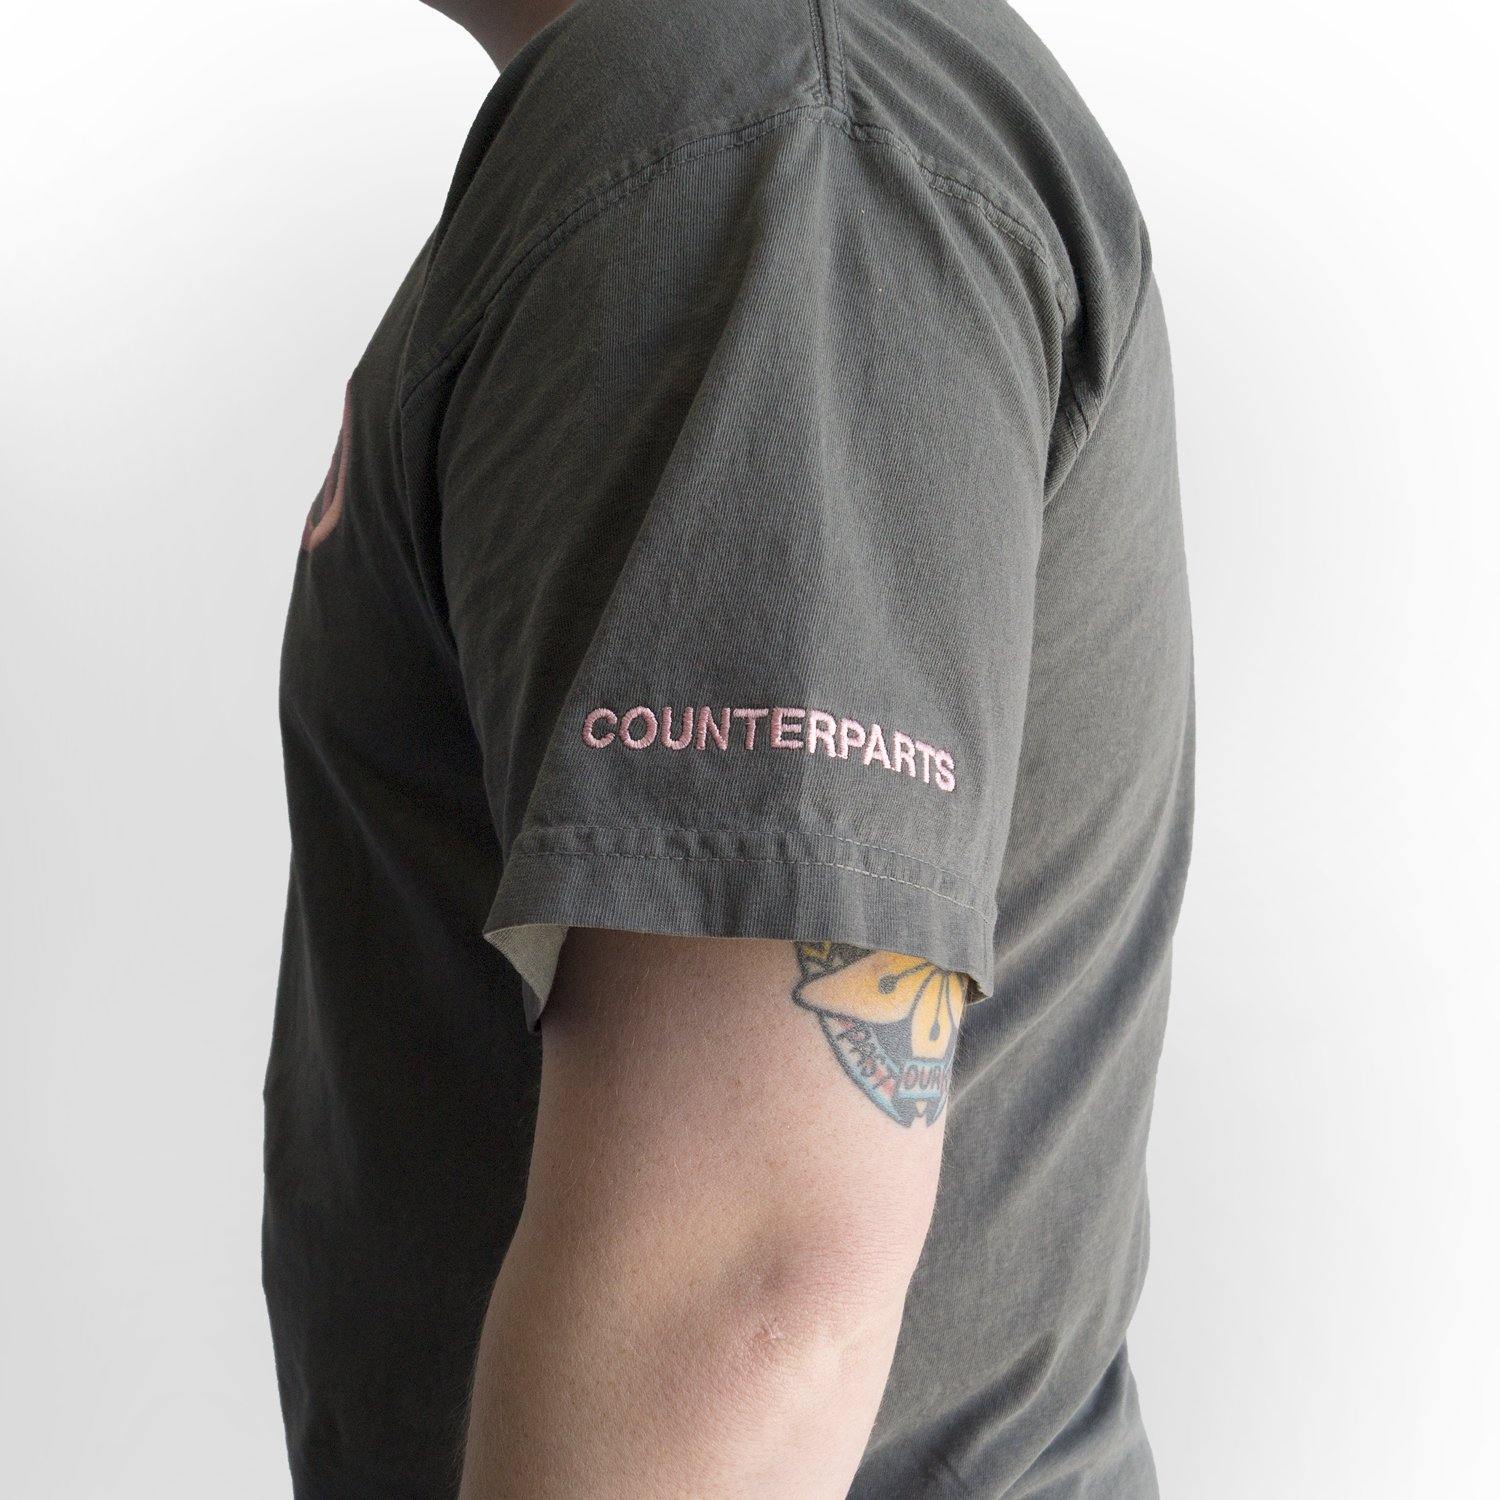 Buy – Counterparts "Not You" Shirt – Band & Music Merch – Cold Cuts Merch